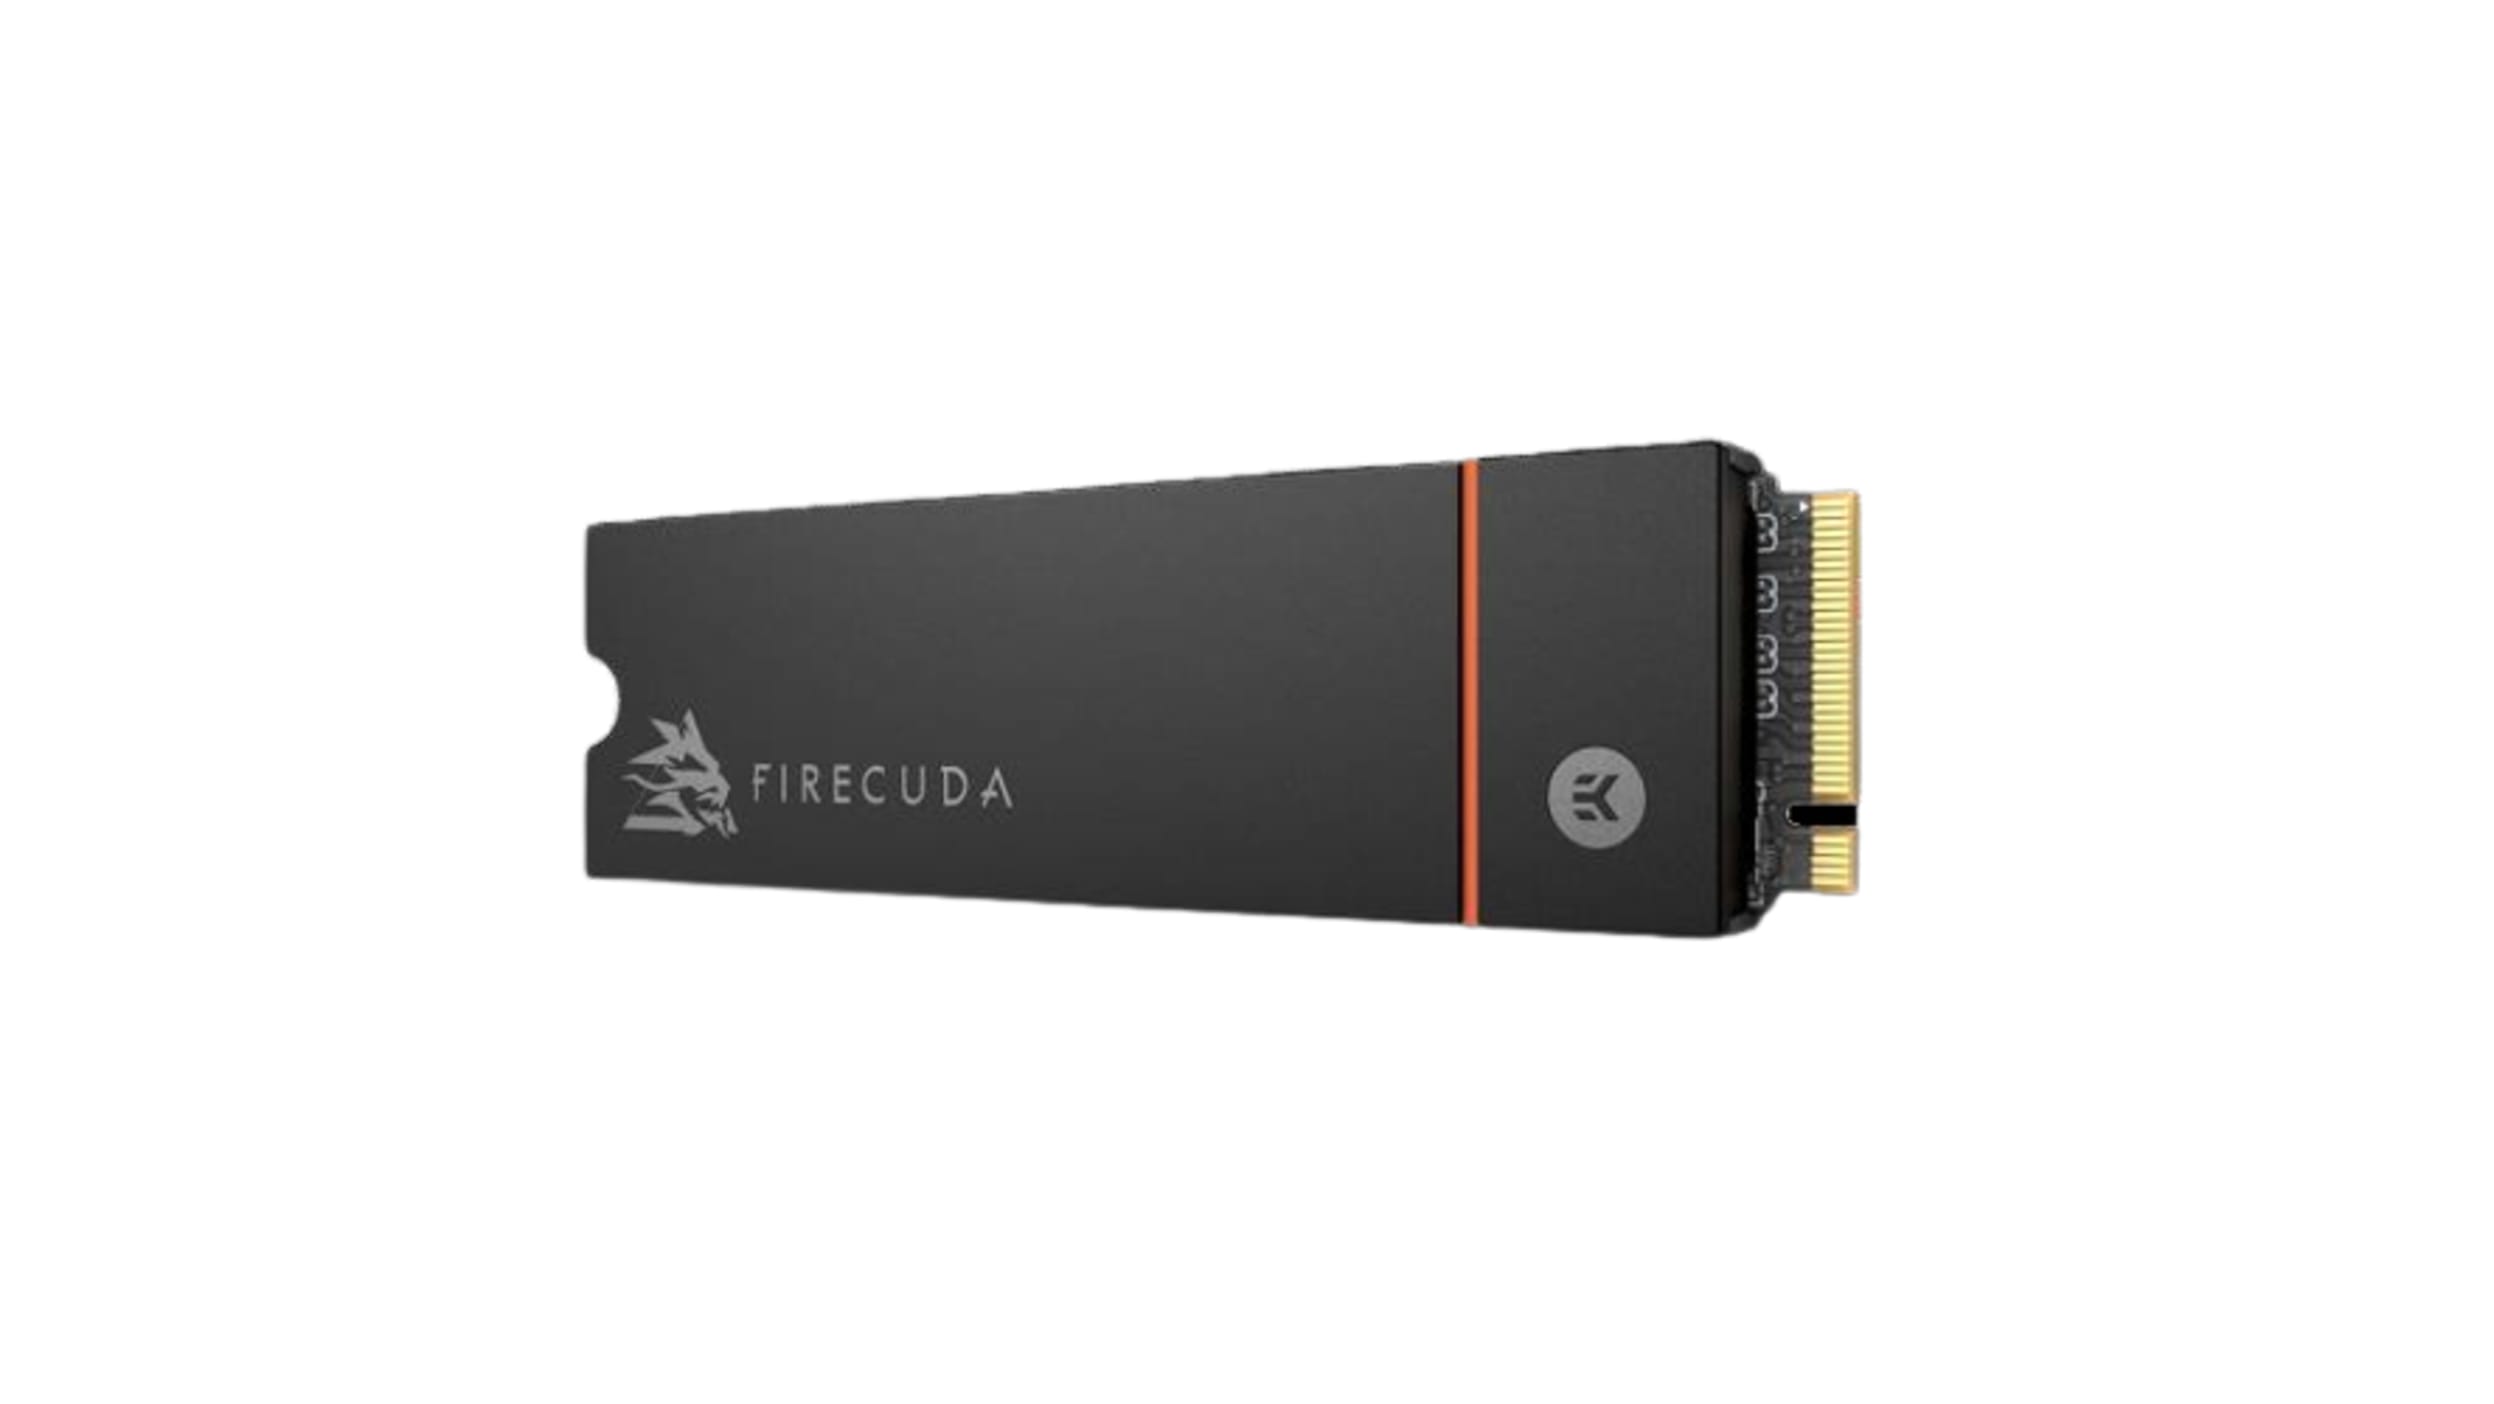 Seagate Firecuda 530 Gen 4 SSD - CyberPowerPC Gaming Drive